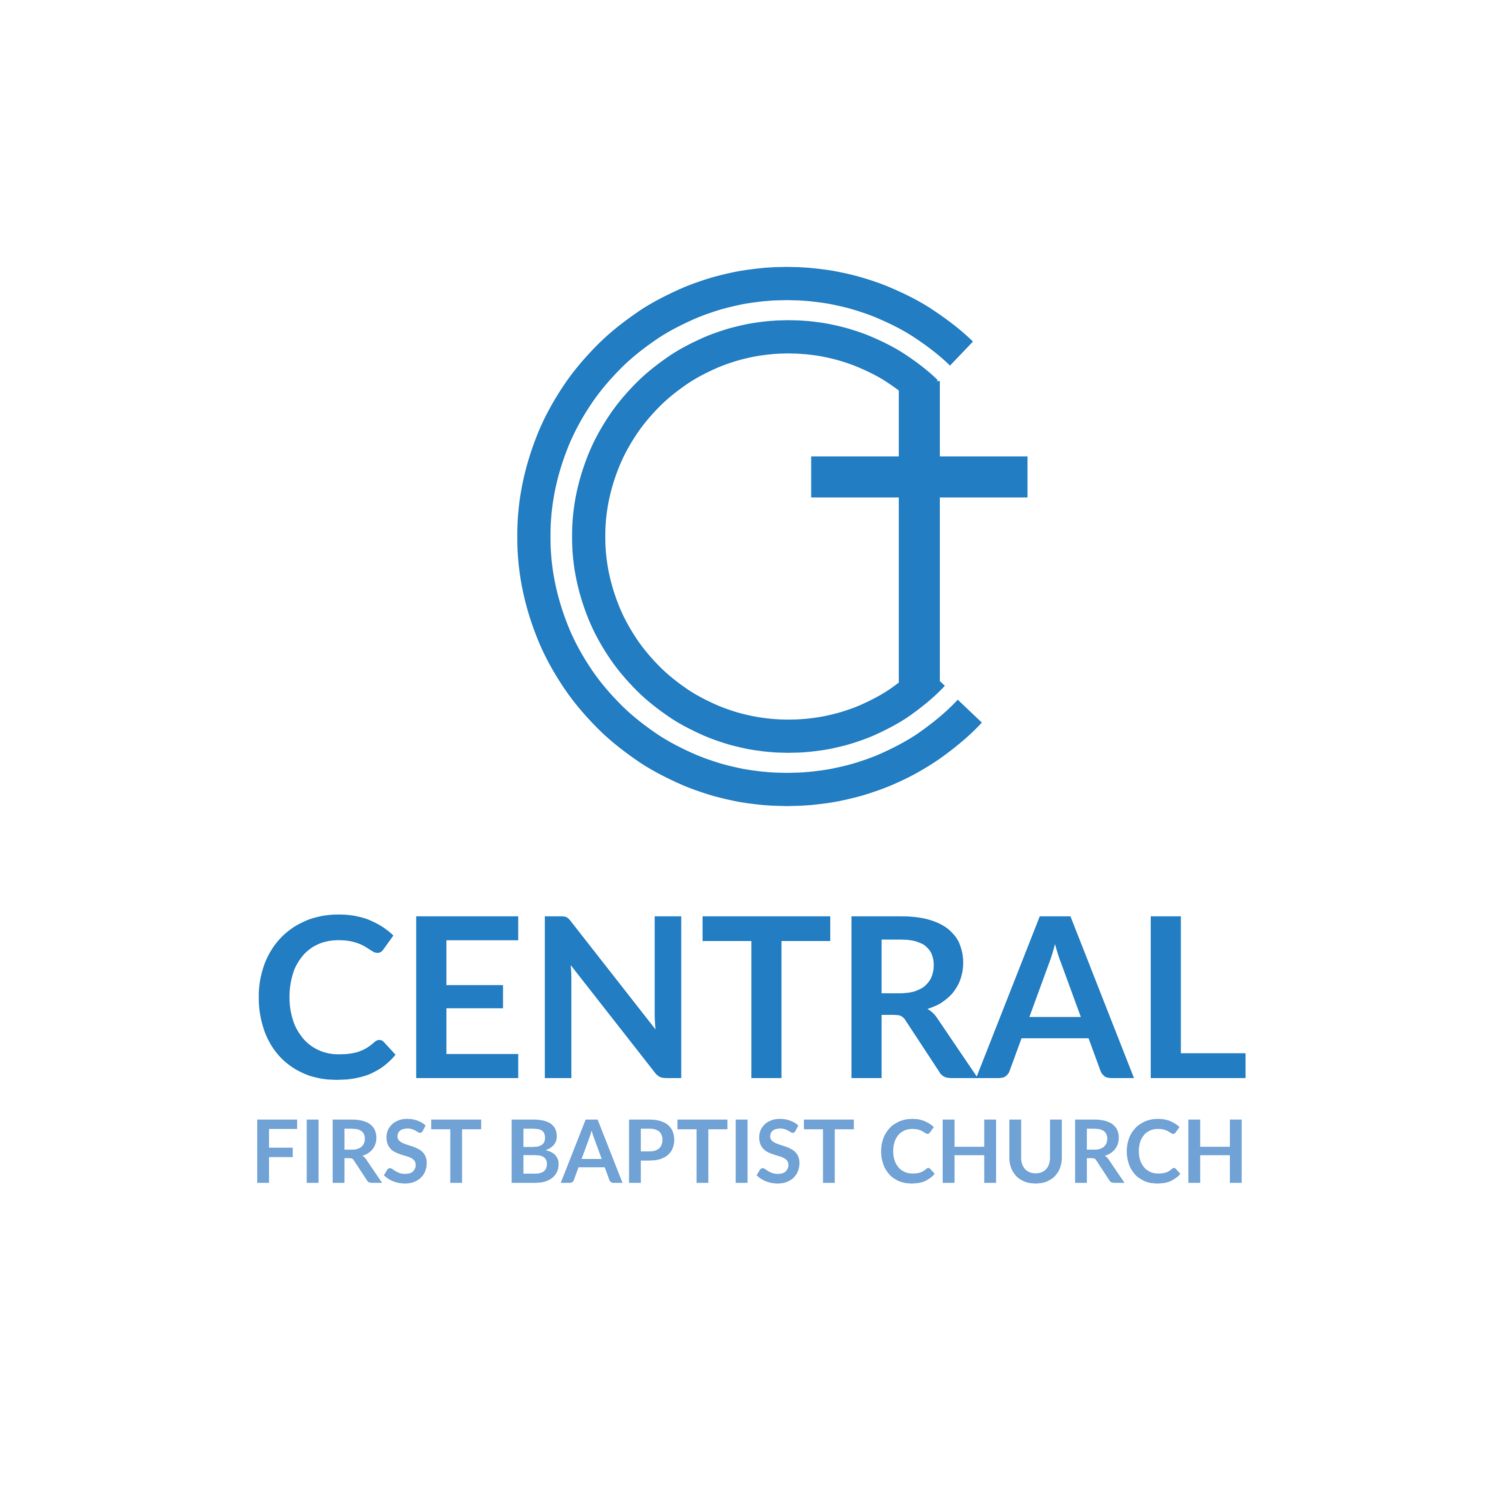 Central First Baptist Church